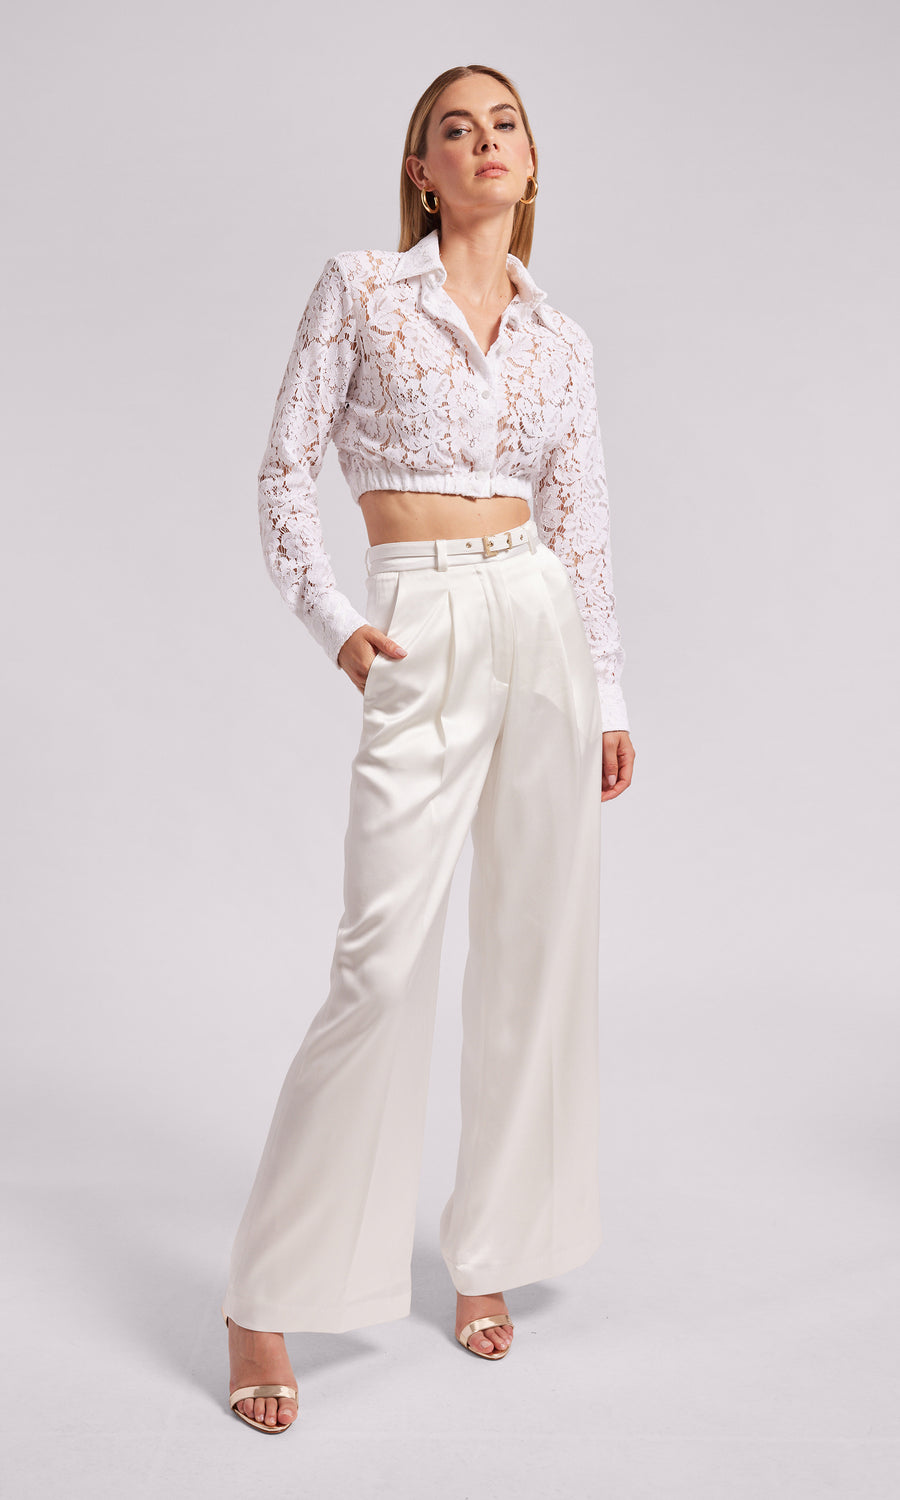 Bellini Lace Shirt - White